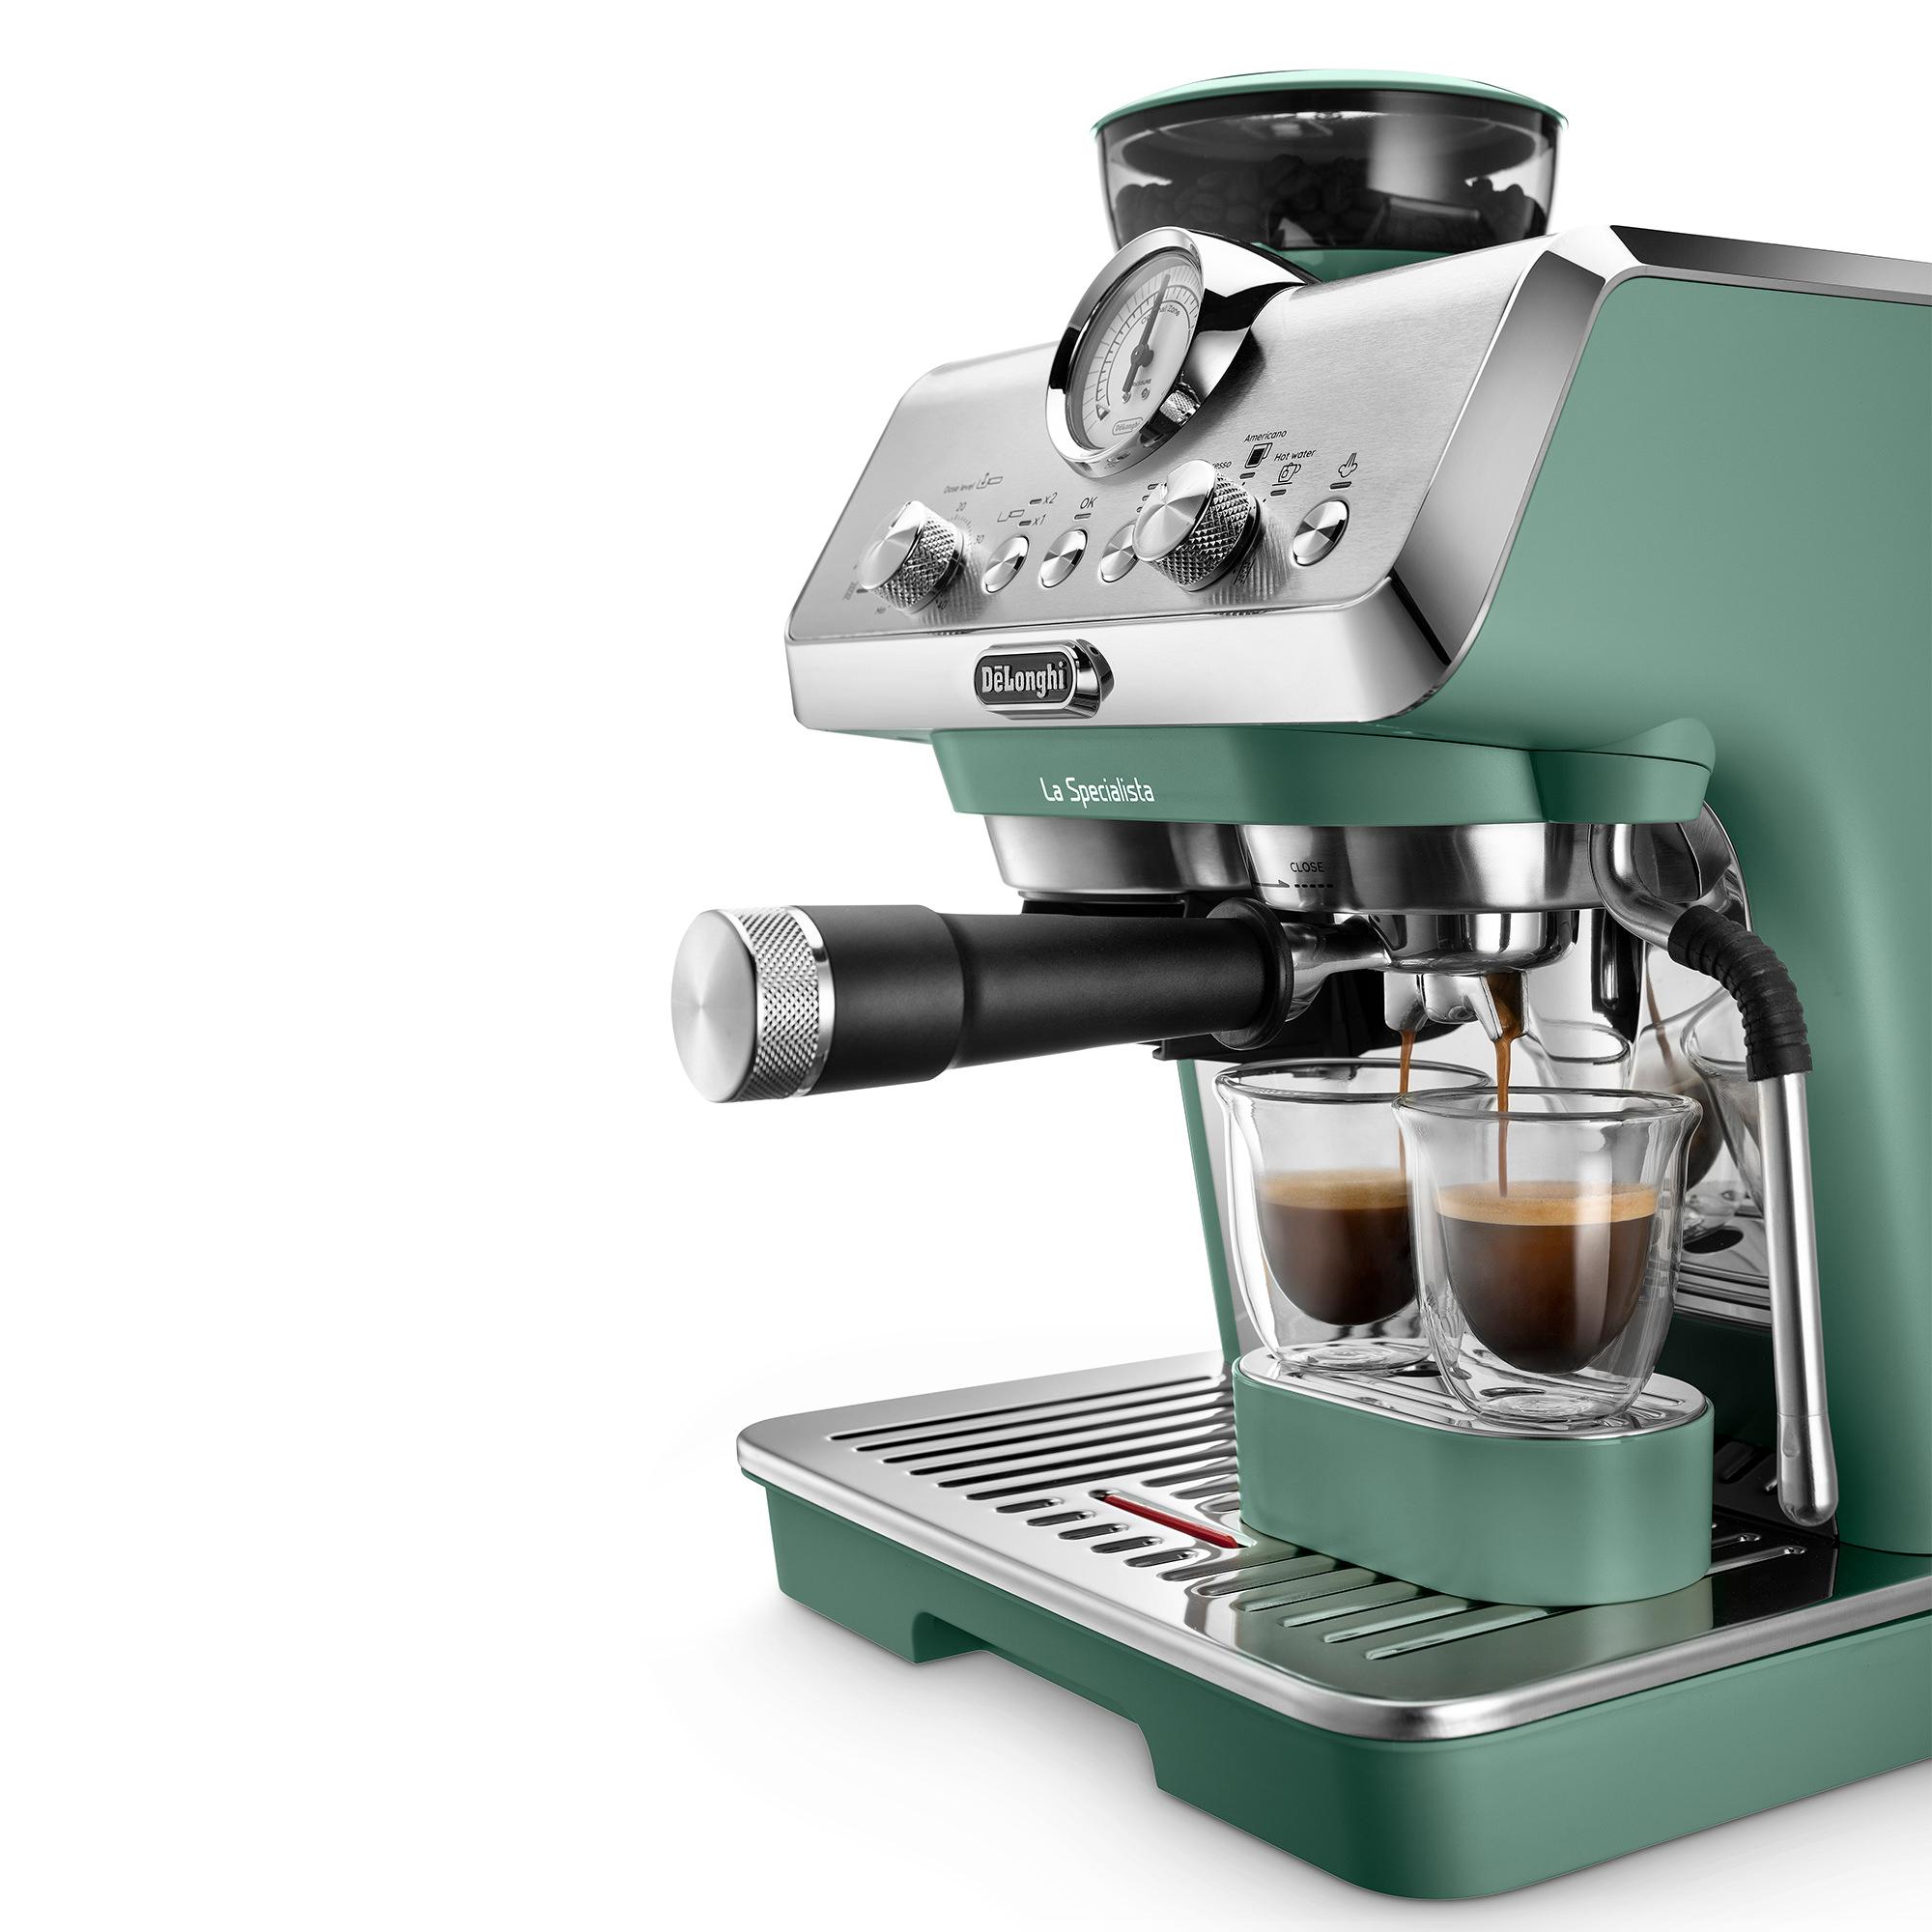 DeLonghi La Specialista Arte EC9155GR Espresso Coffee Machine Toronto Green Image 4